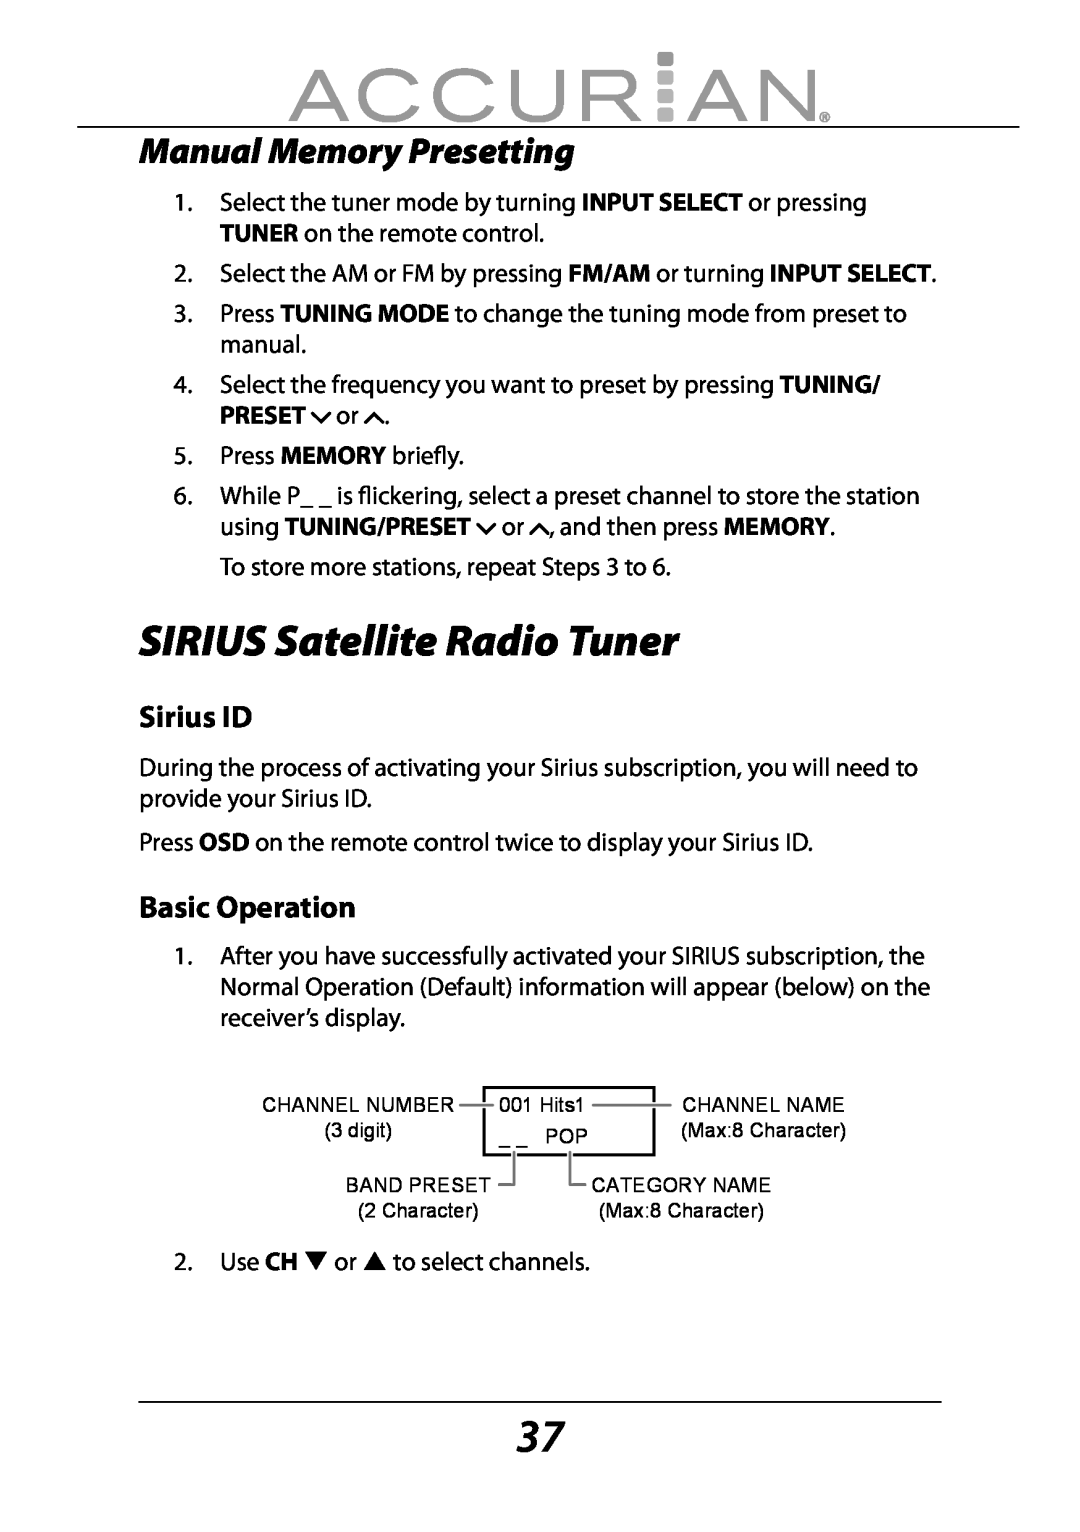 Sirius Satellite Radio 6.1ch Sirius-Ready A/V Surround Receiver SIRIUS Satellite Radio Tuner, Manual Memory Presetting 